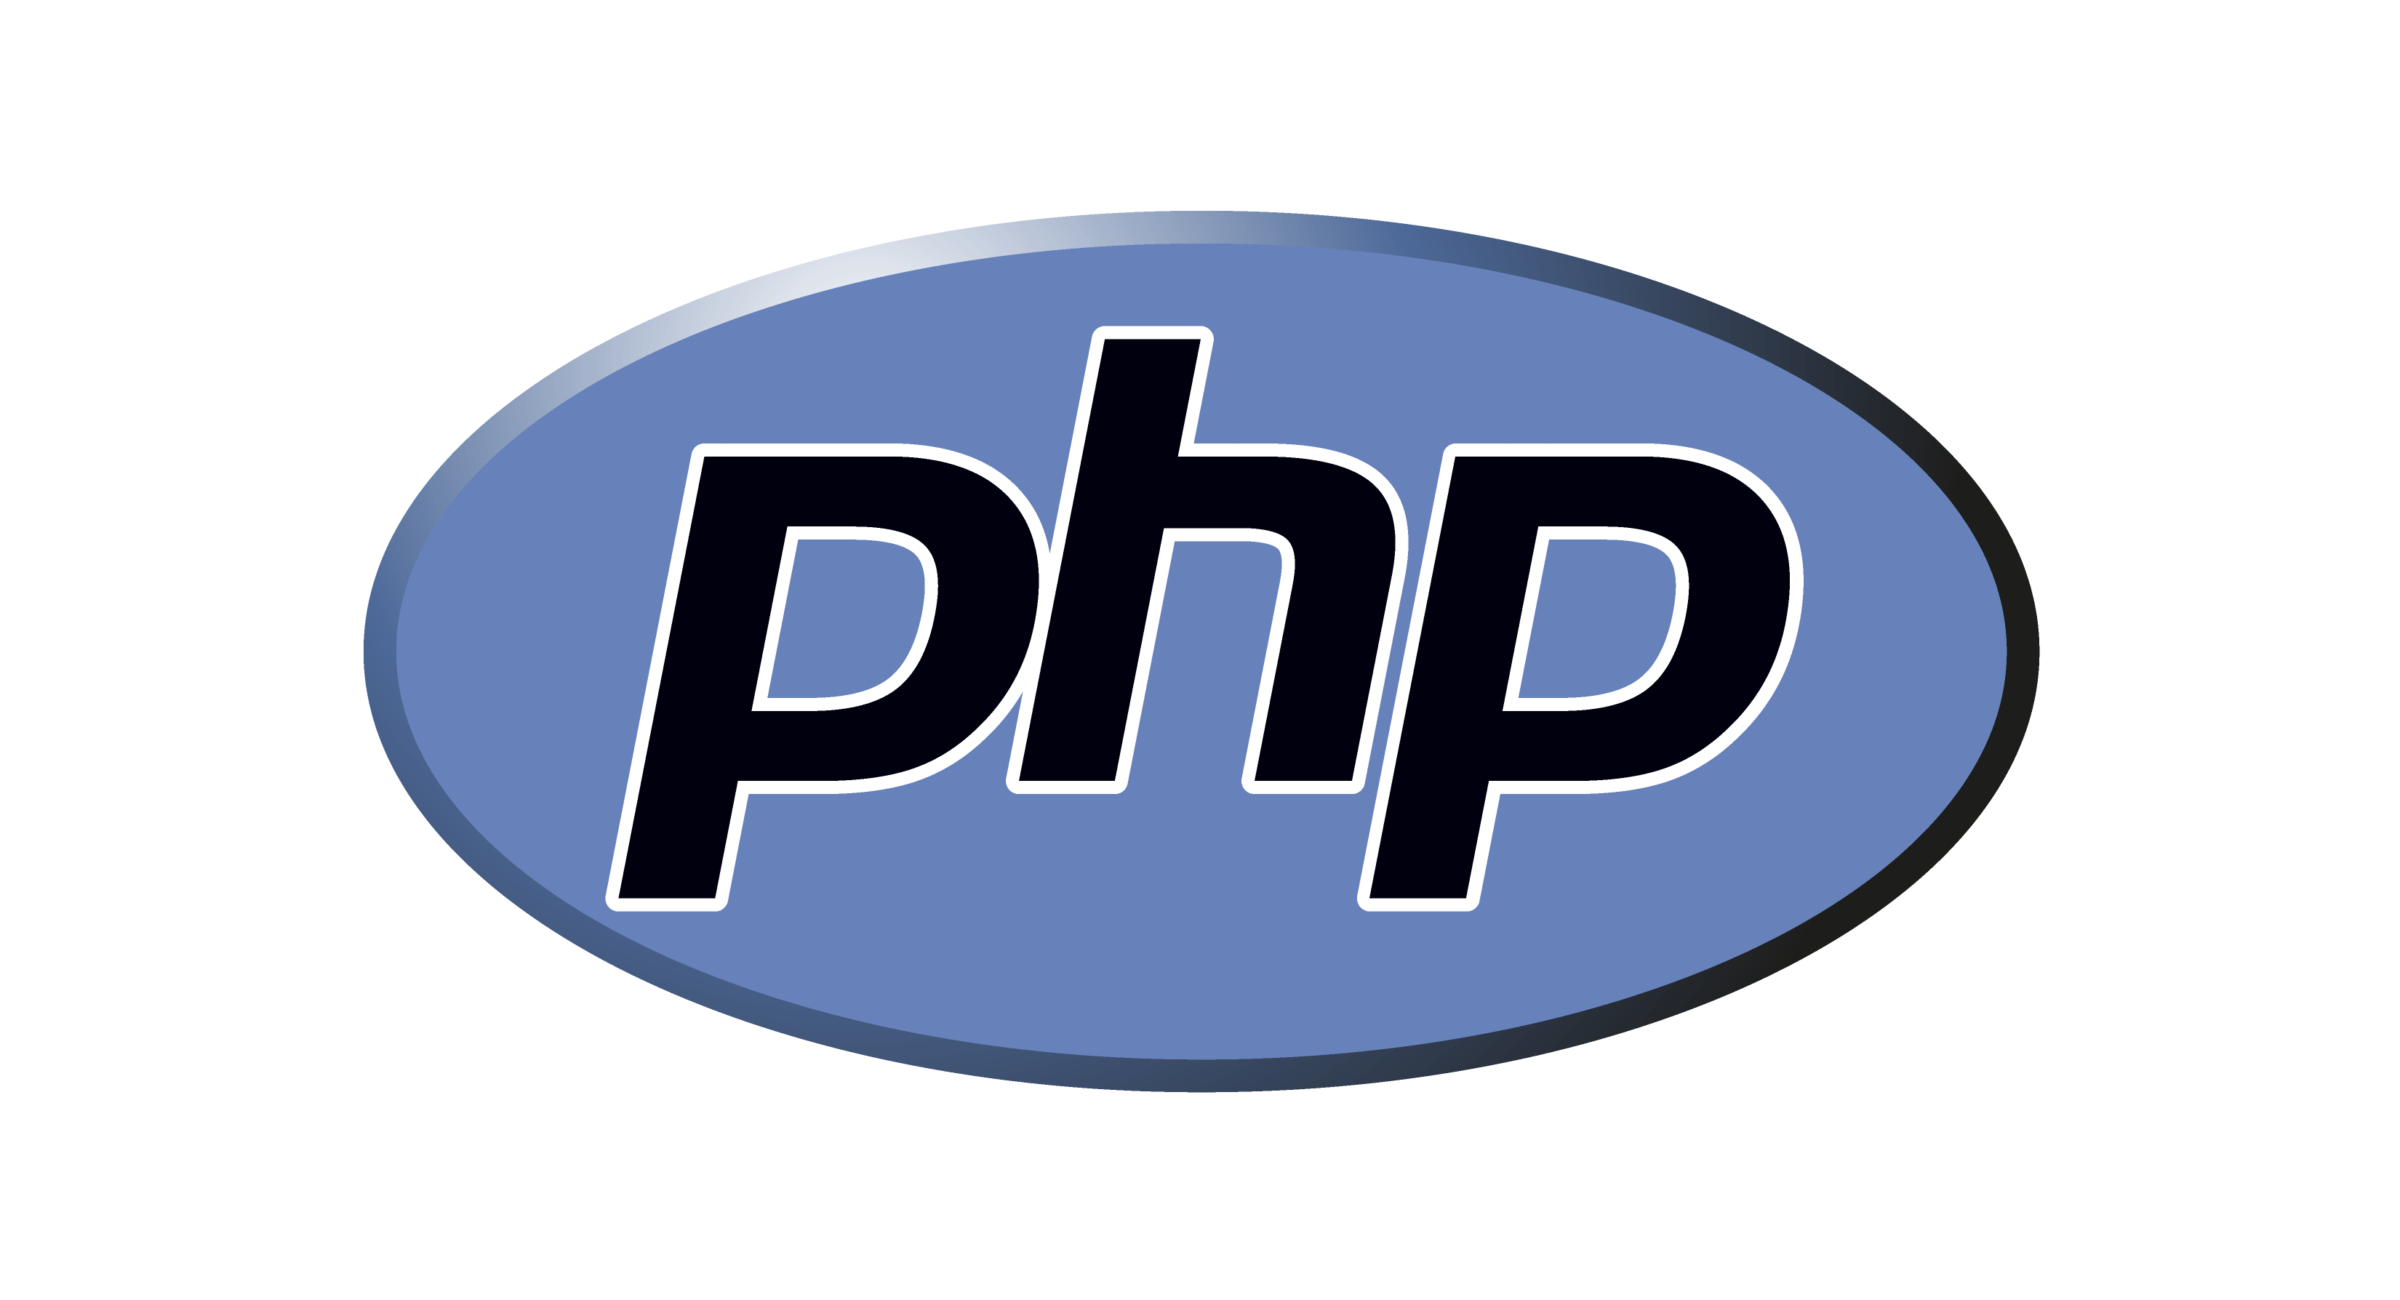 Php logo. Php. Php лого. Php фото. Php без фона.